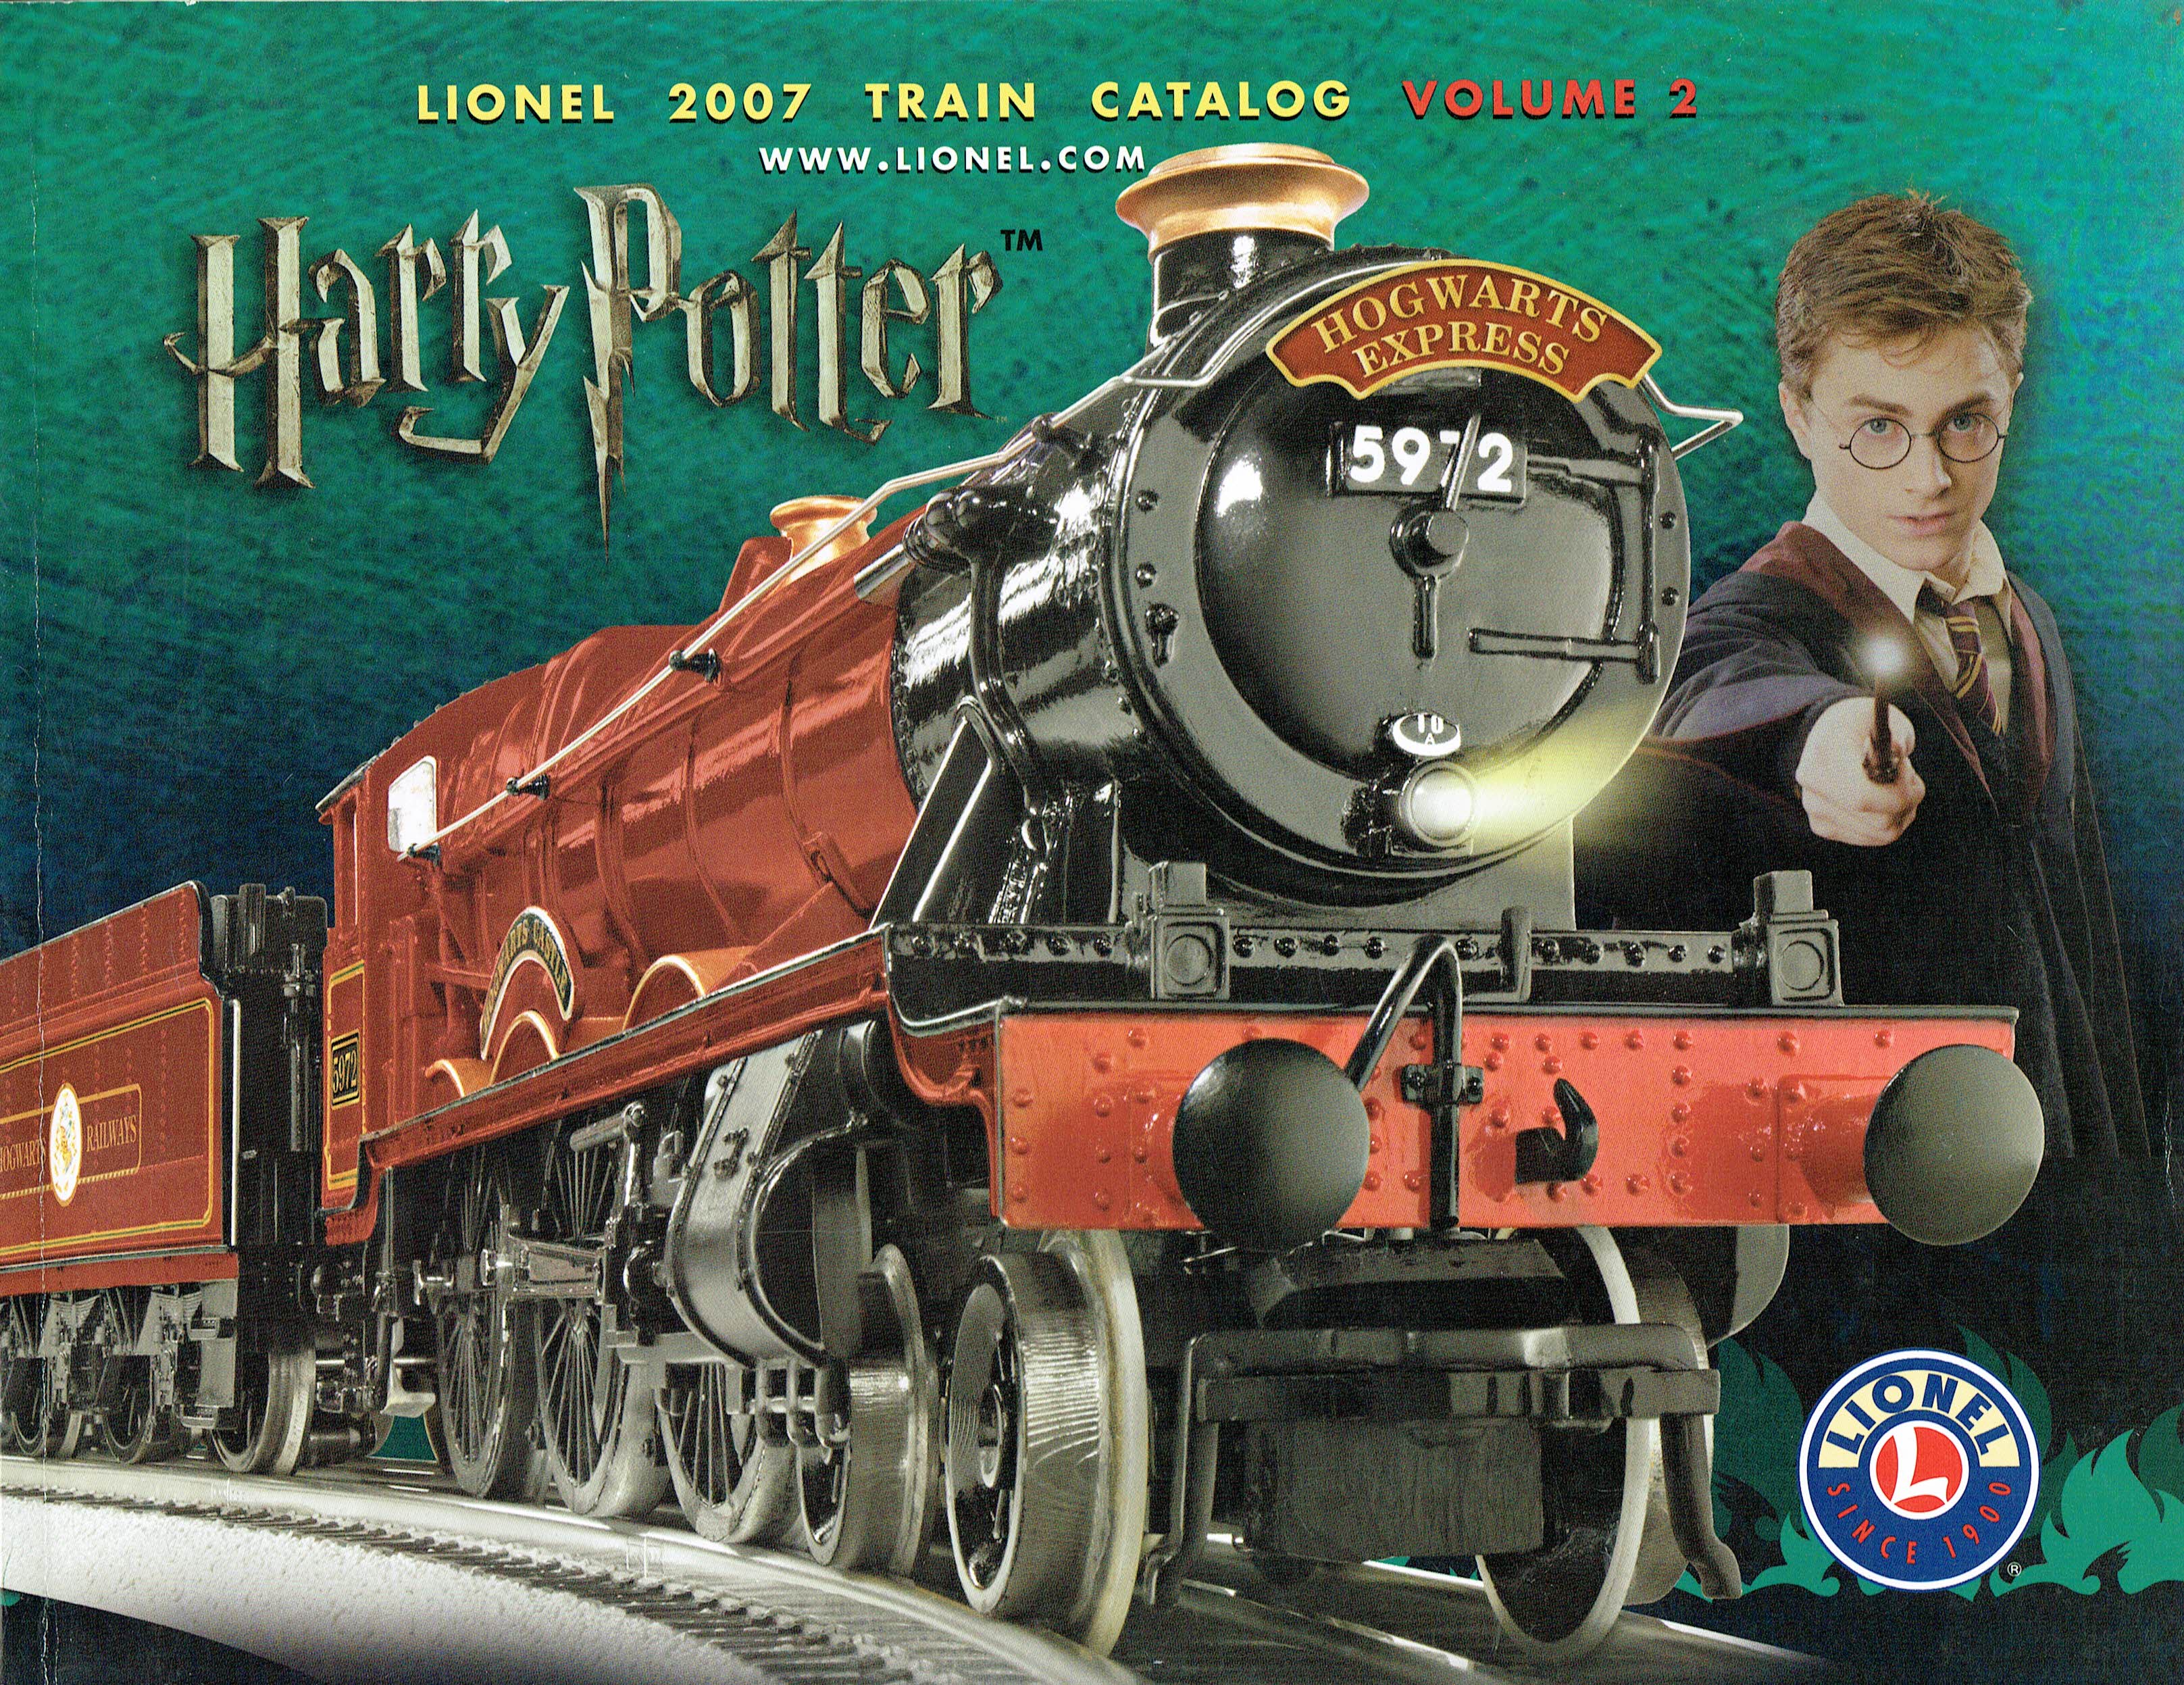 Lionel 2007 Train Catalog Volume 2 "Harry Potter" image